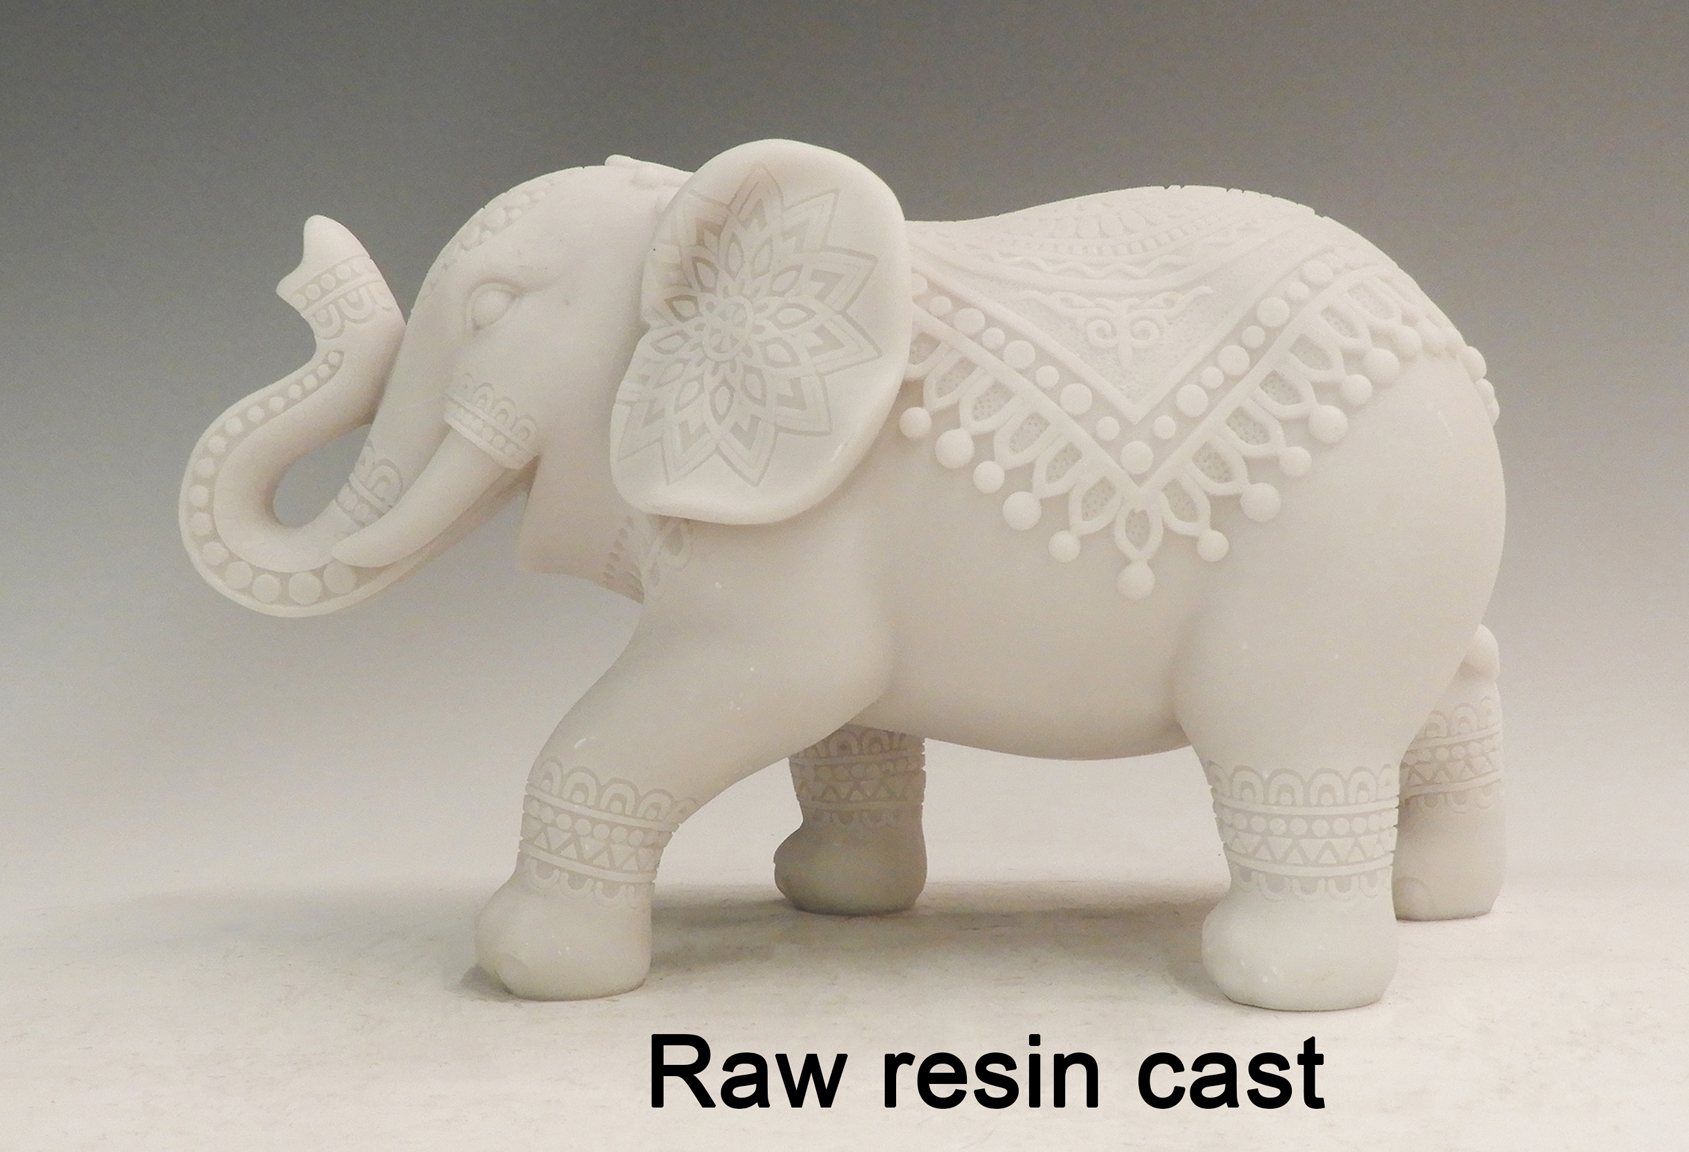 3 raw resin cast.jpg